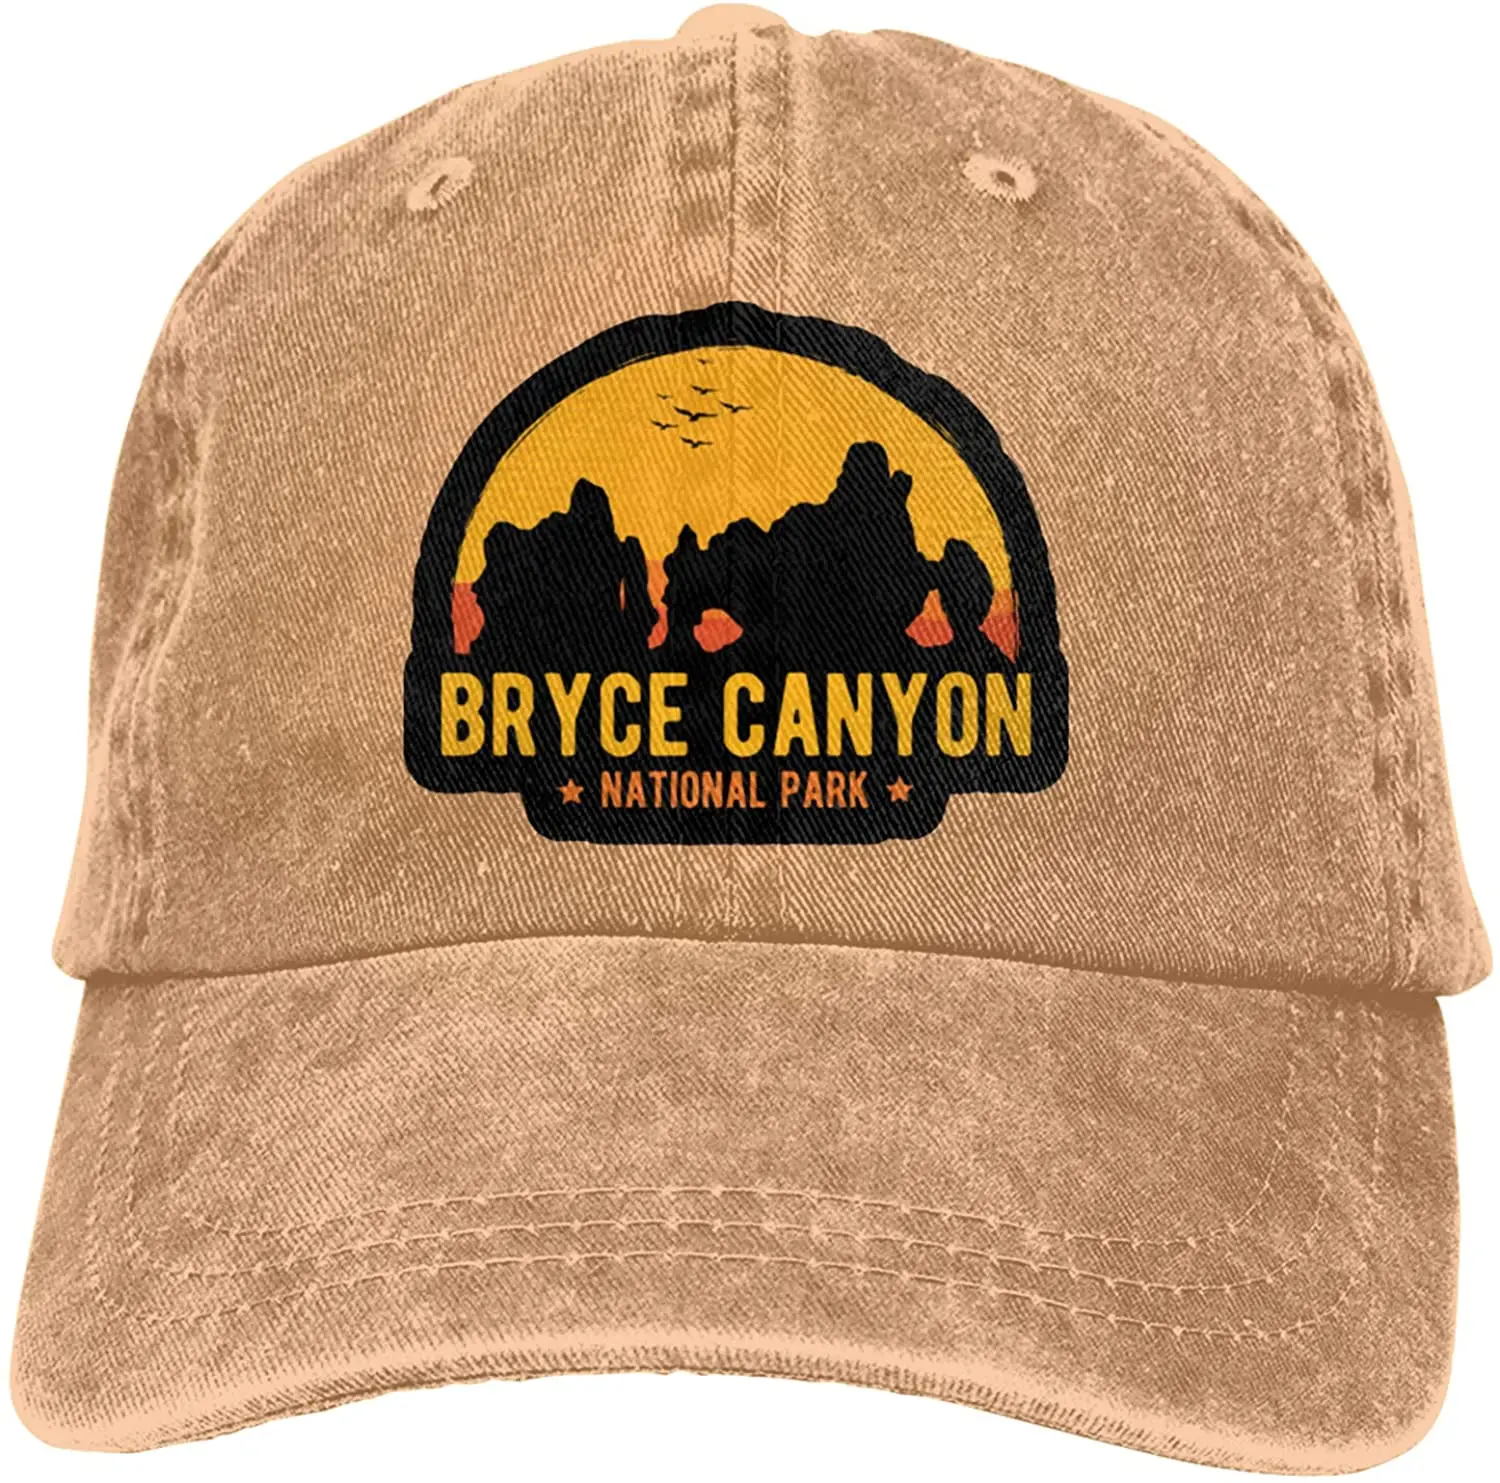 

Bryce Canyon National Park Denim Caps Vintage Washed Distressed Cotton Dad Hat Adjustable Baseball Hats for Unisex